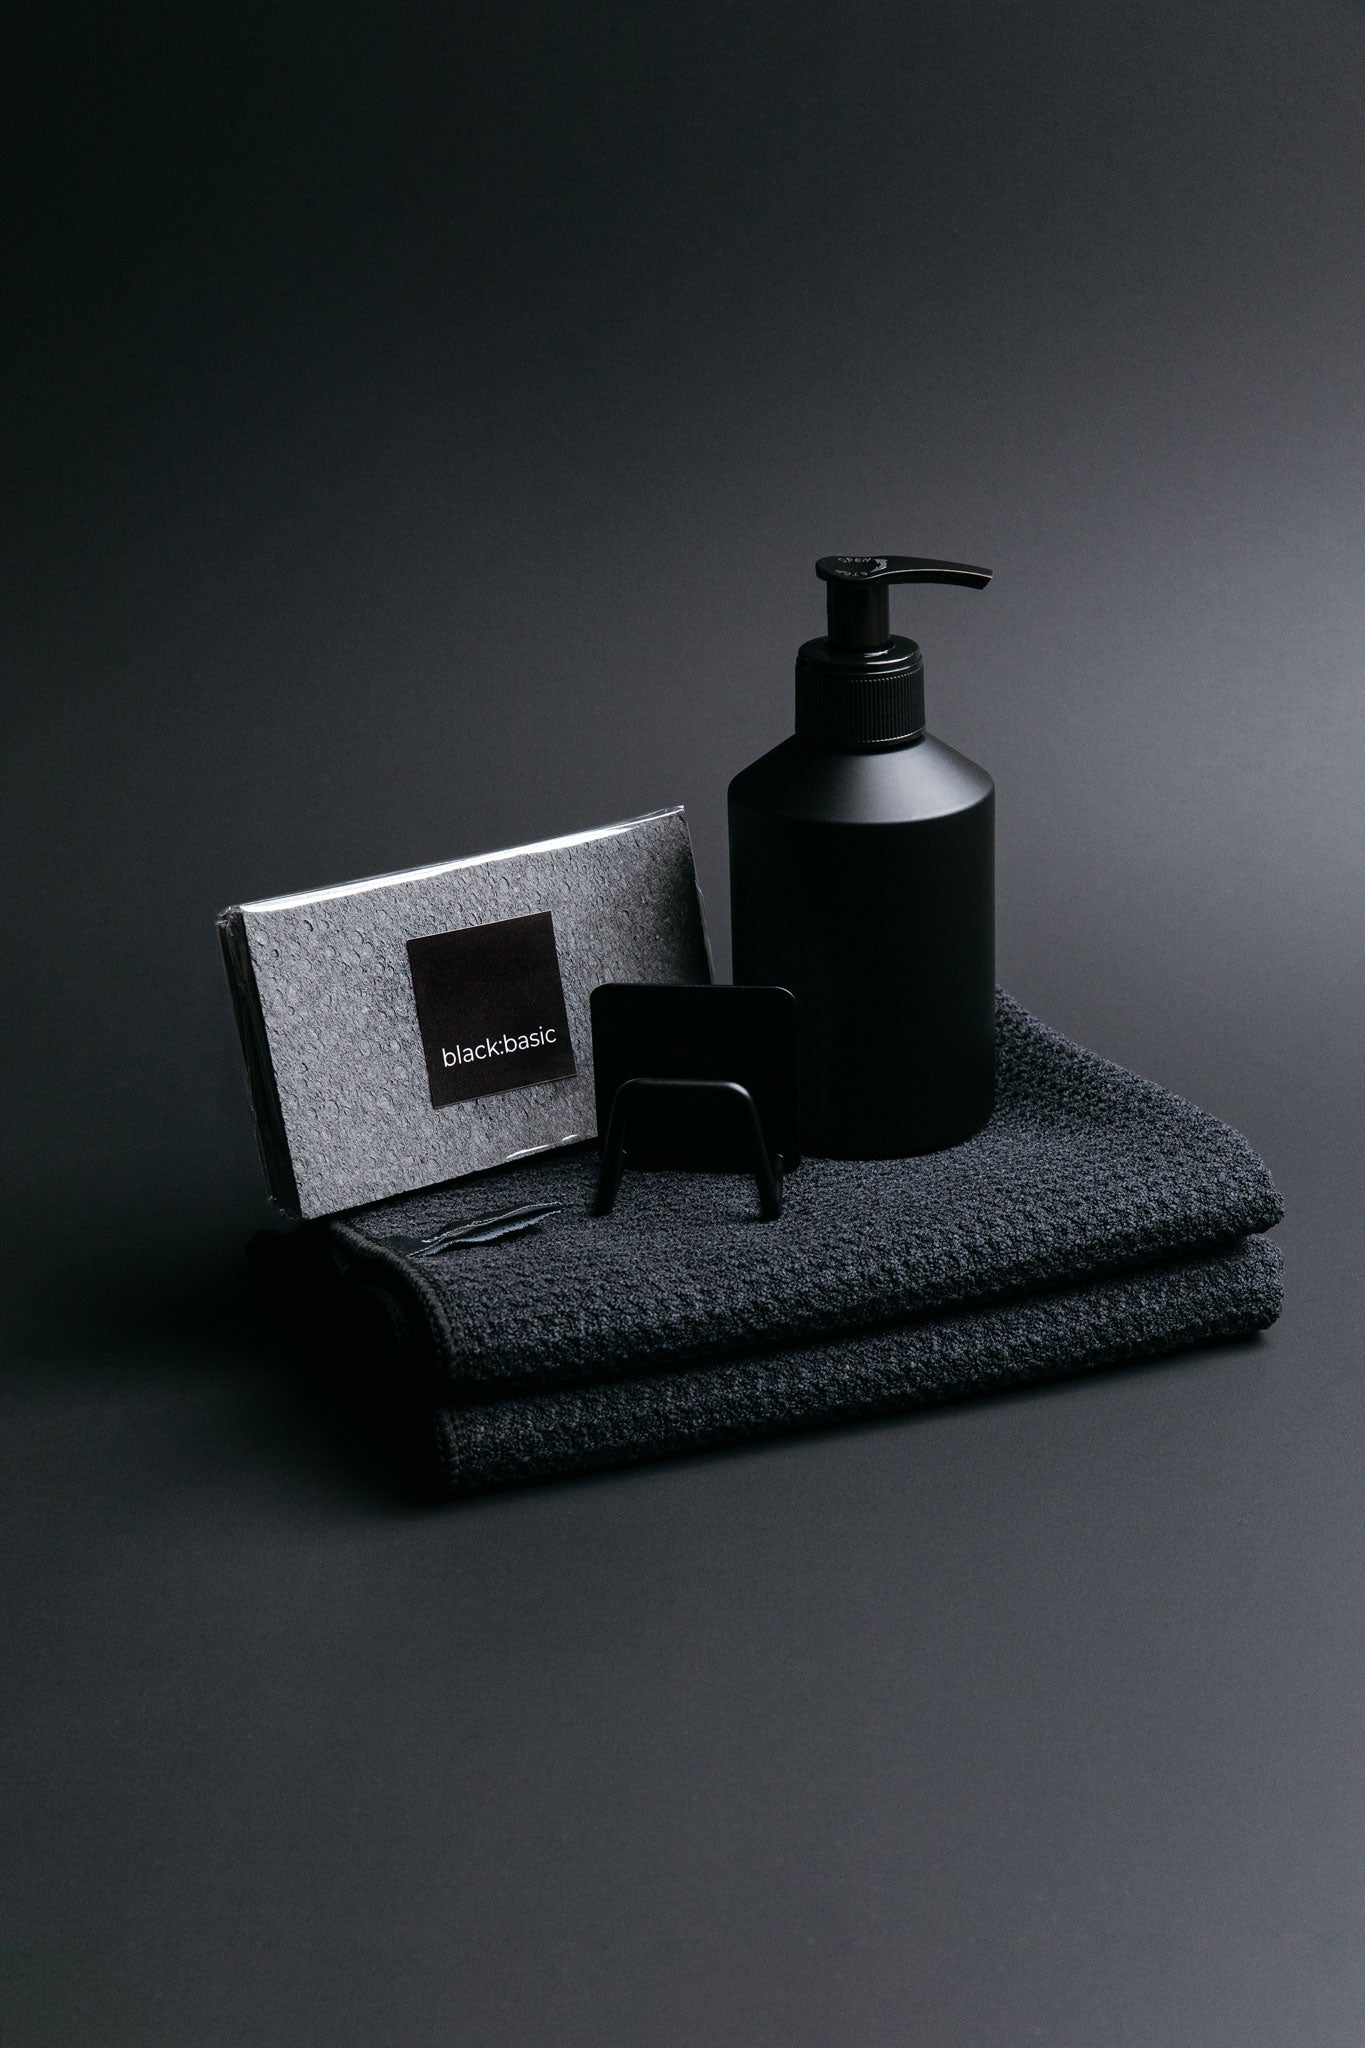 tre Nebu Rejse Kitchen accessories starter set – black:basic